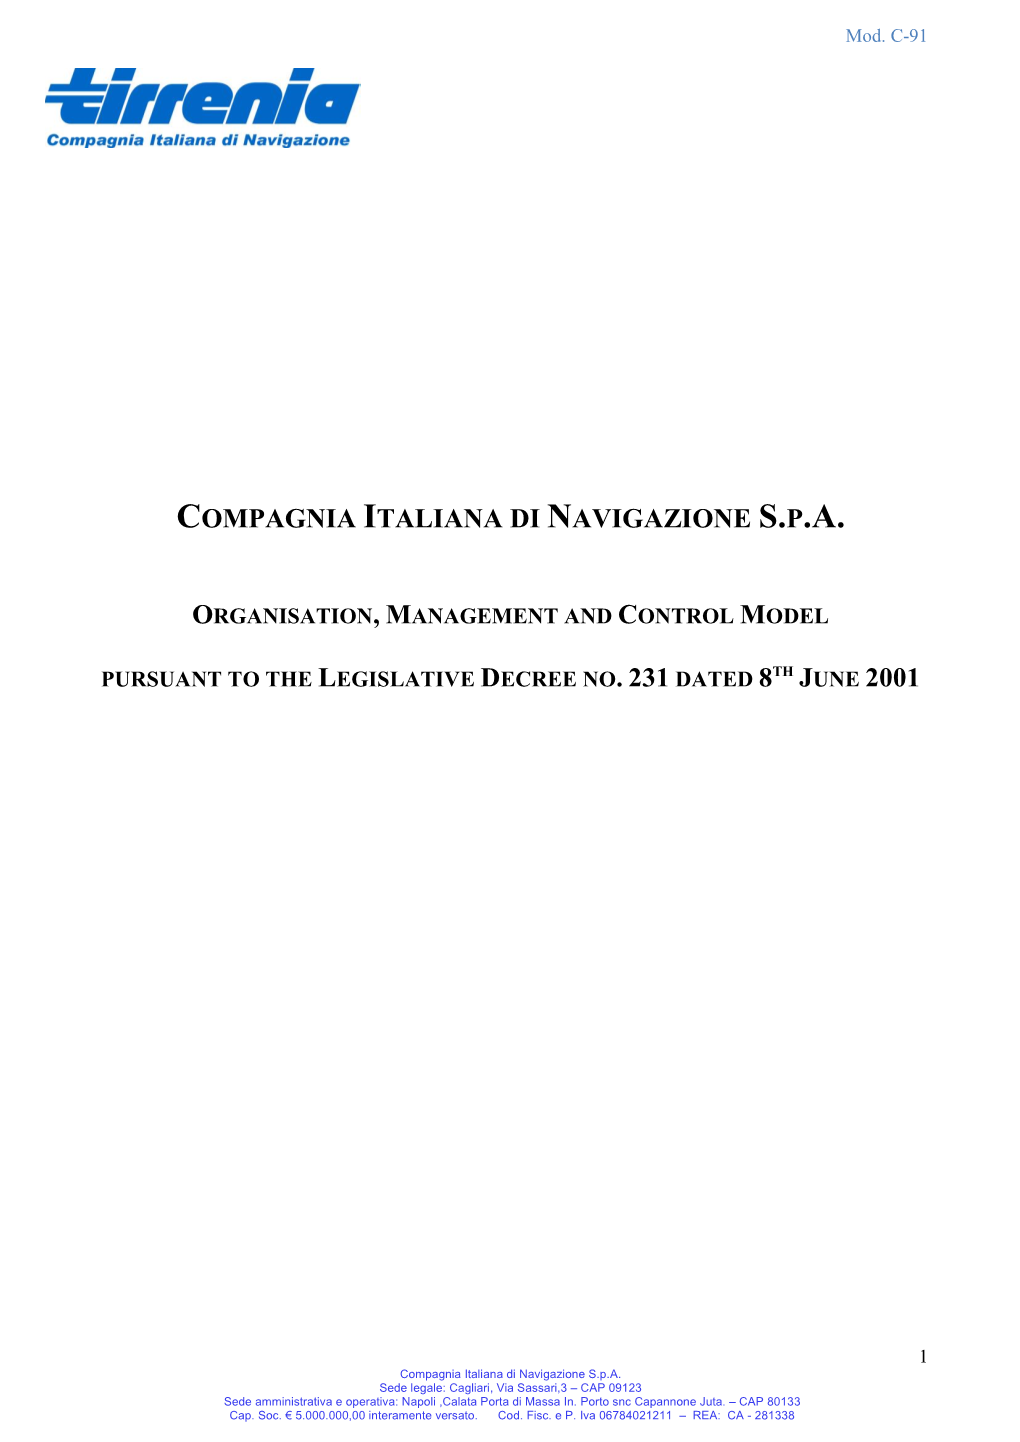 Compagnia Italiana Di Navigazione S.P.A